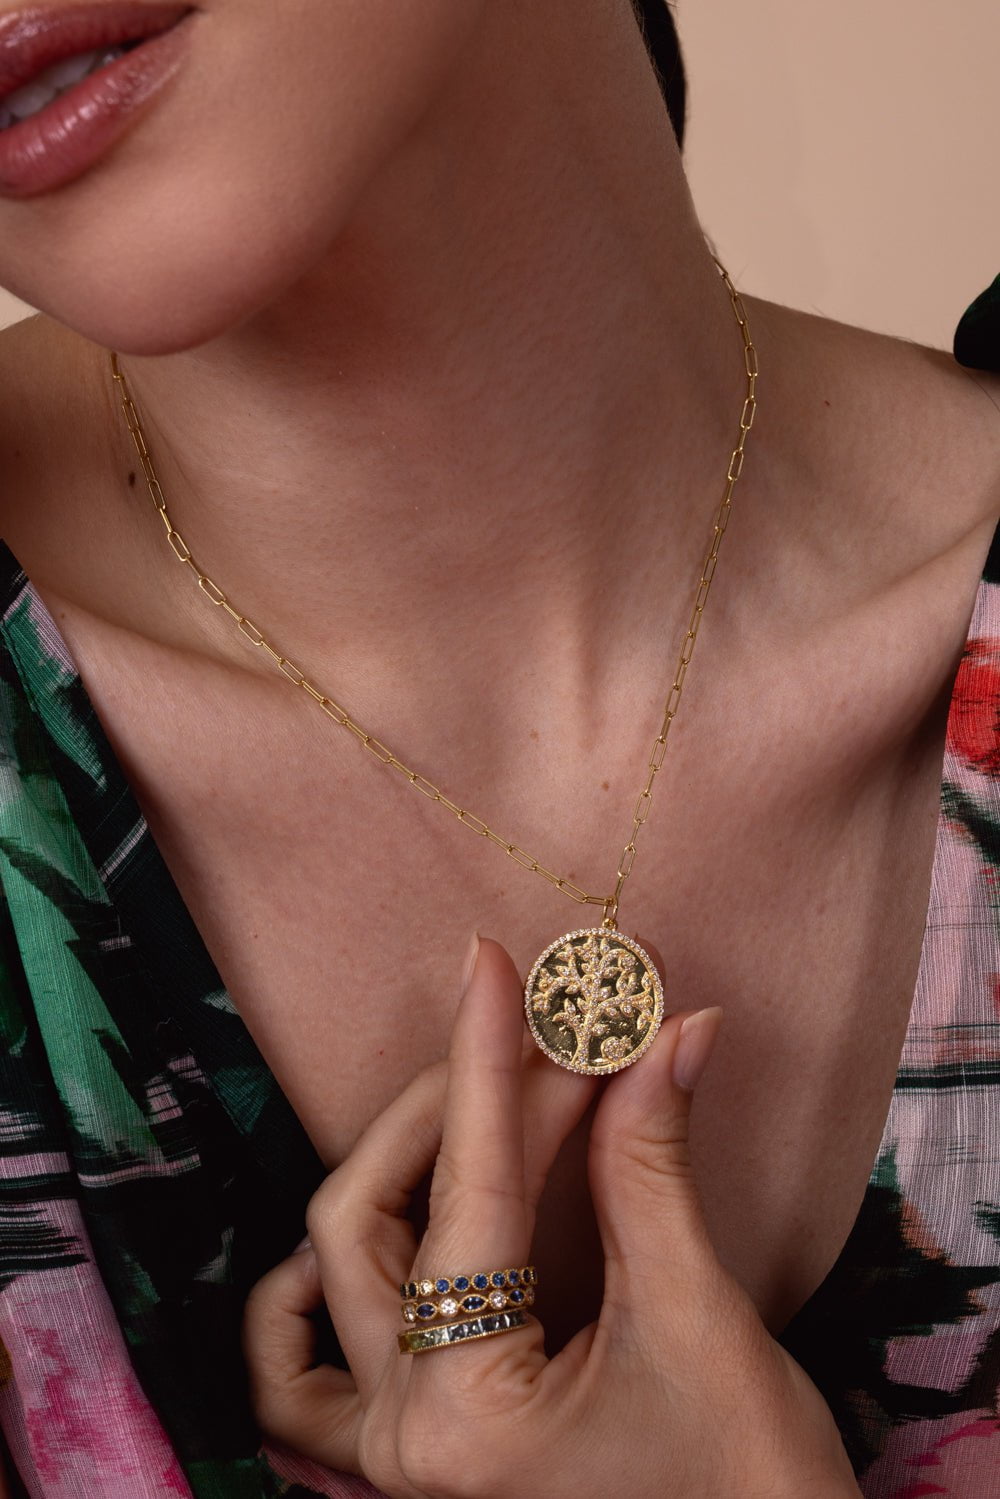 TANYA FARAH-Tree of Life Diamond Disc Necklace-YELLOW GOLD